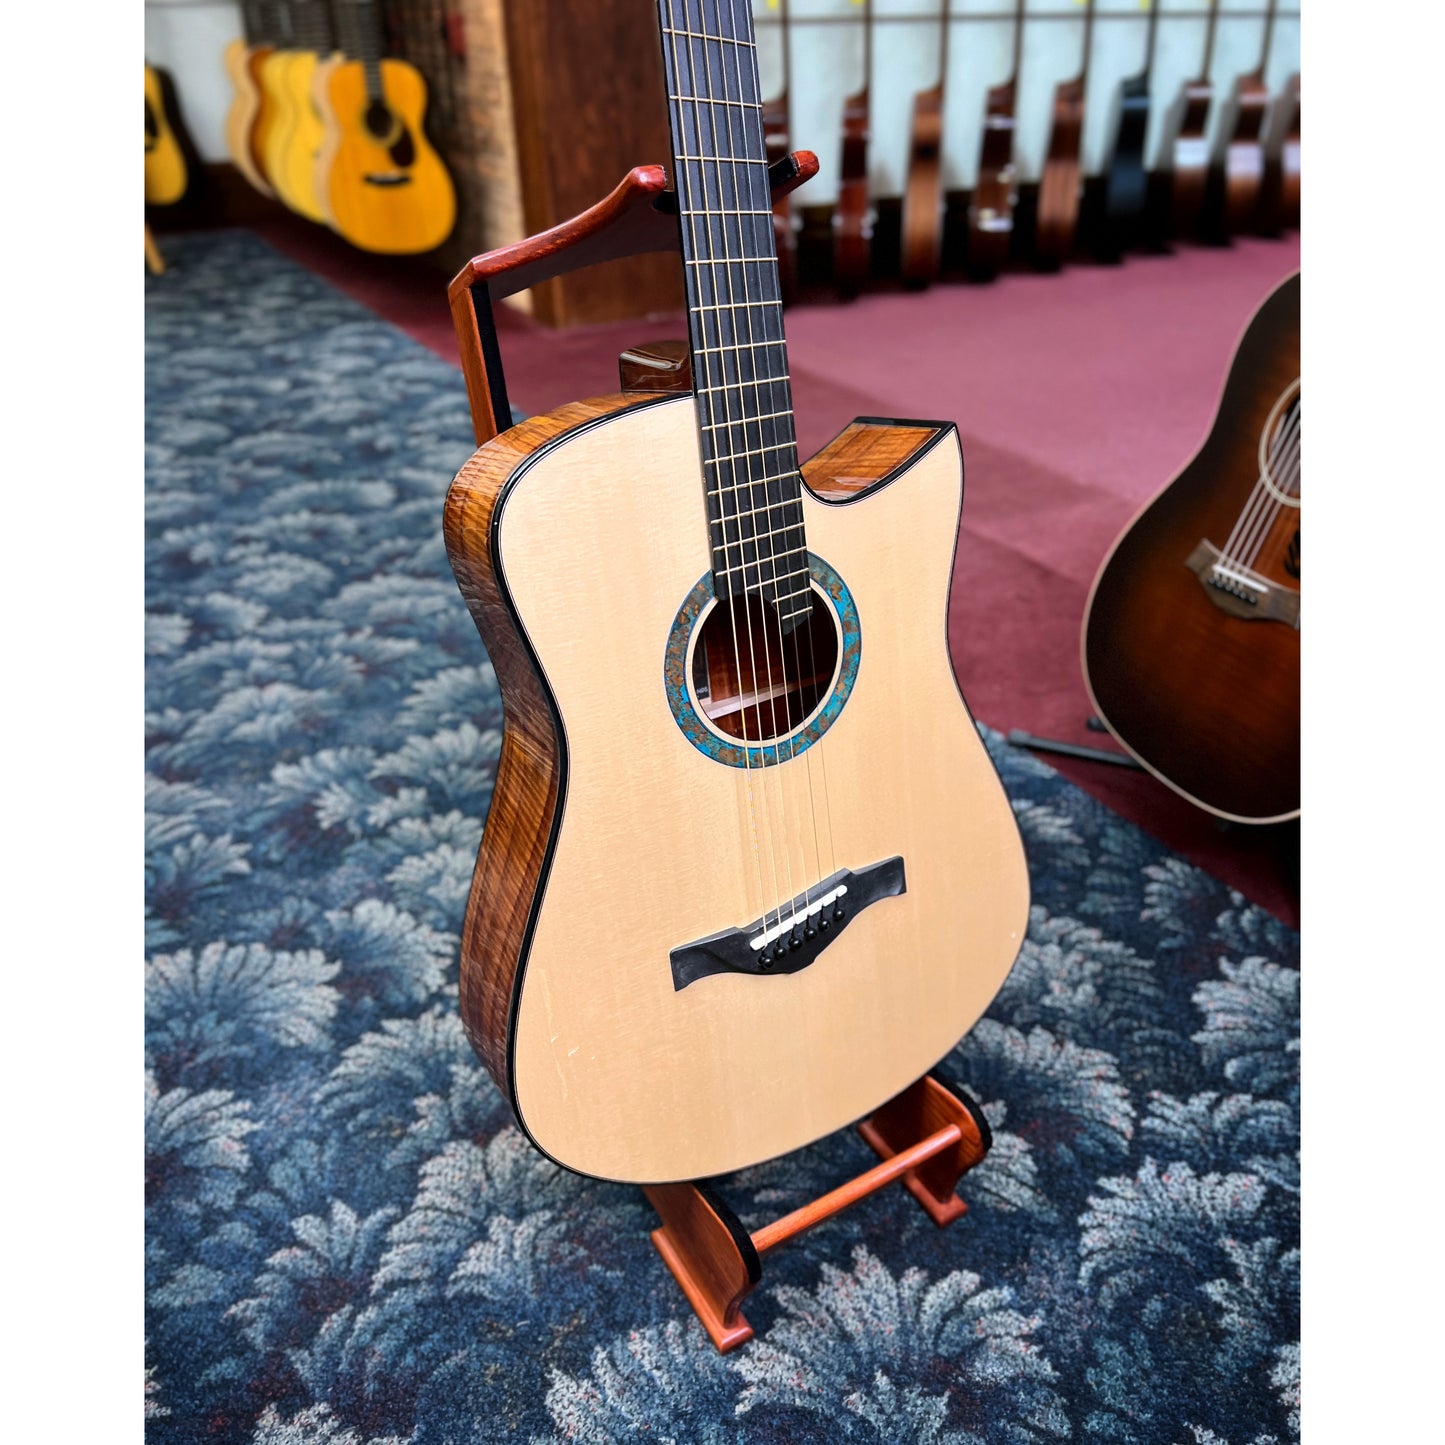 Tom Sands L-12f "Kealia" Model Acoustic Guitar (2019)